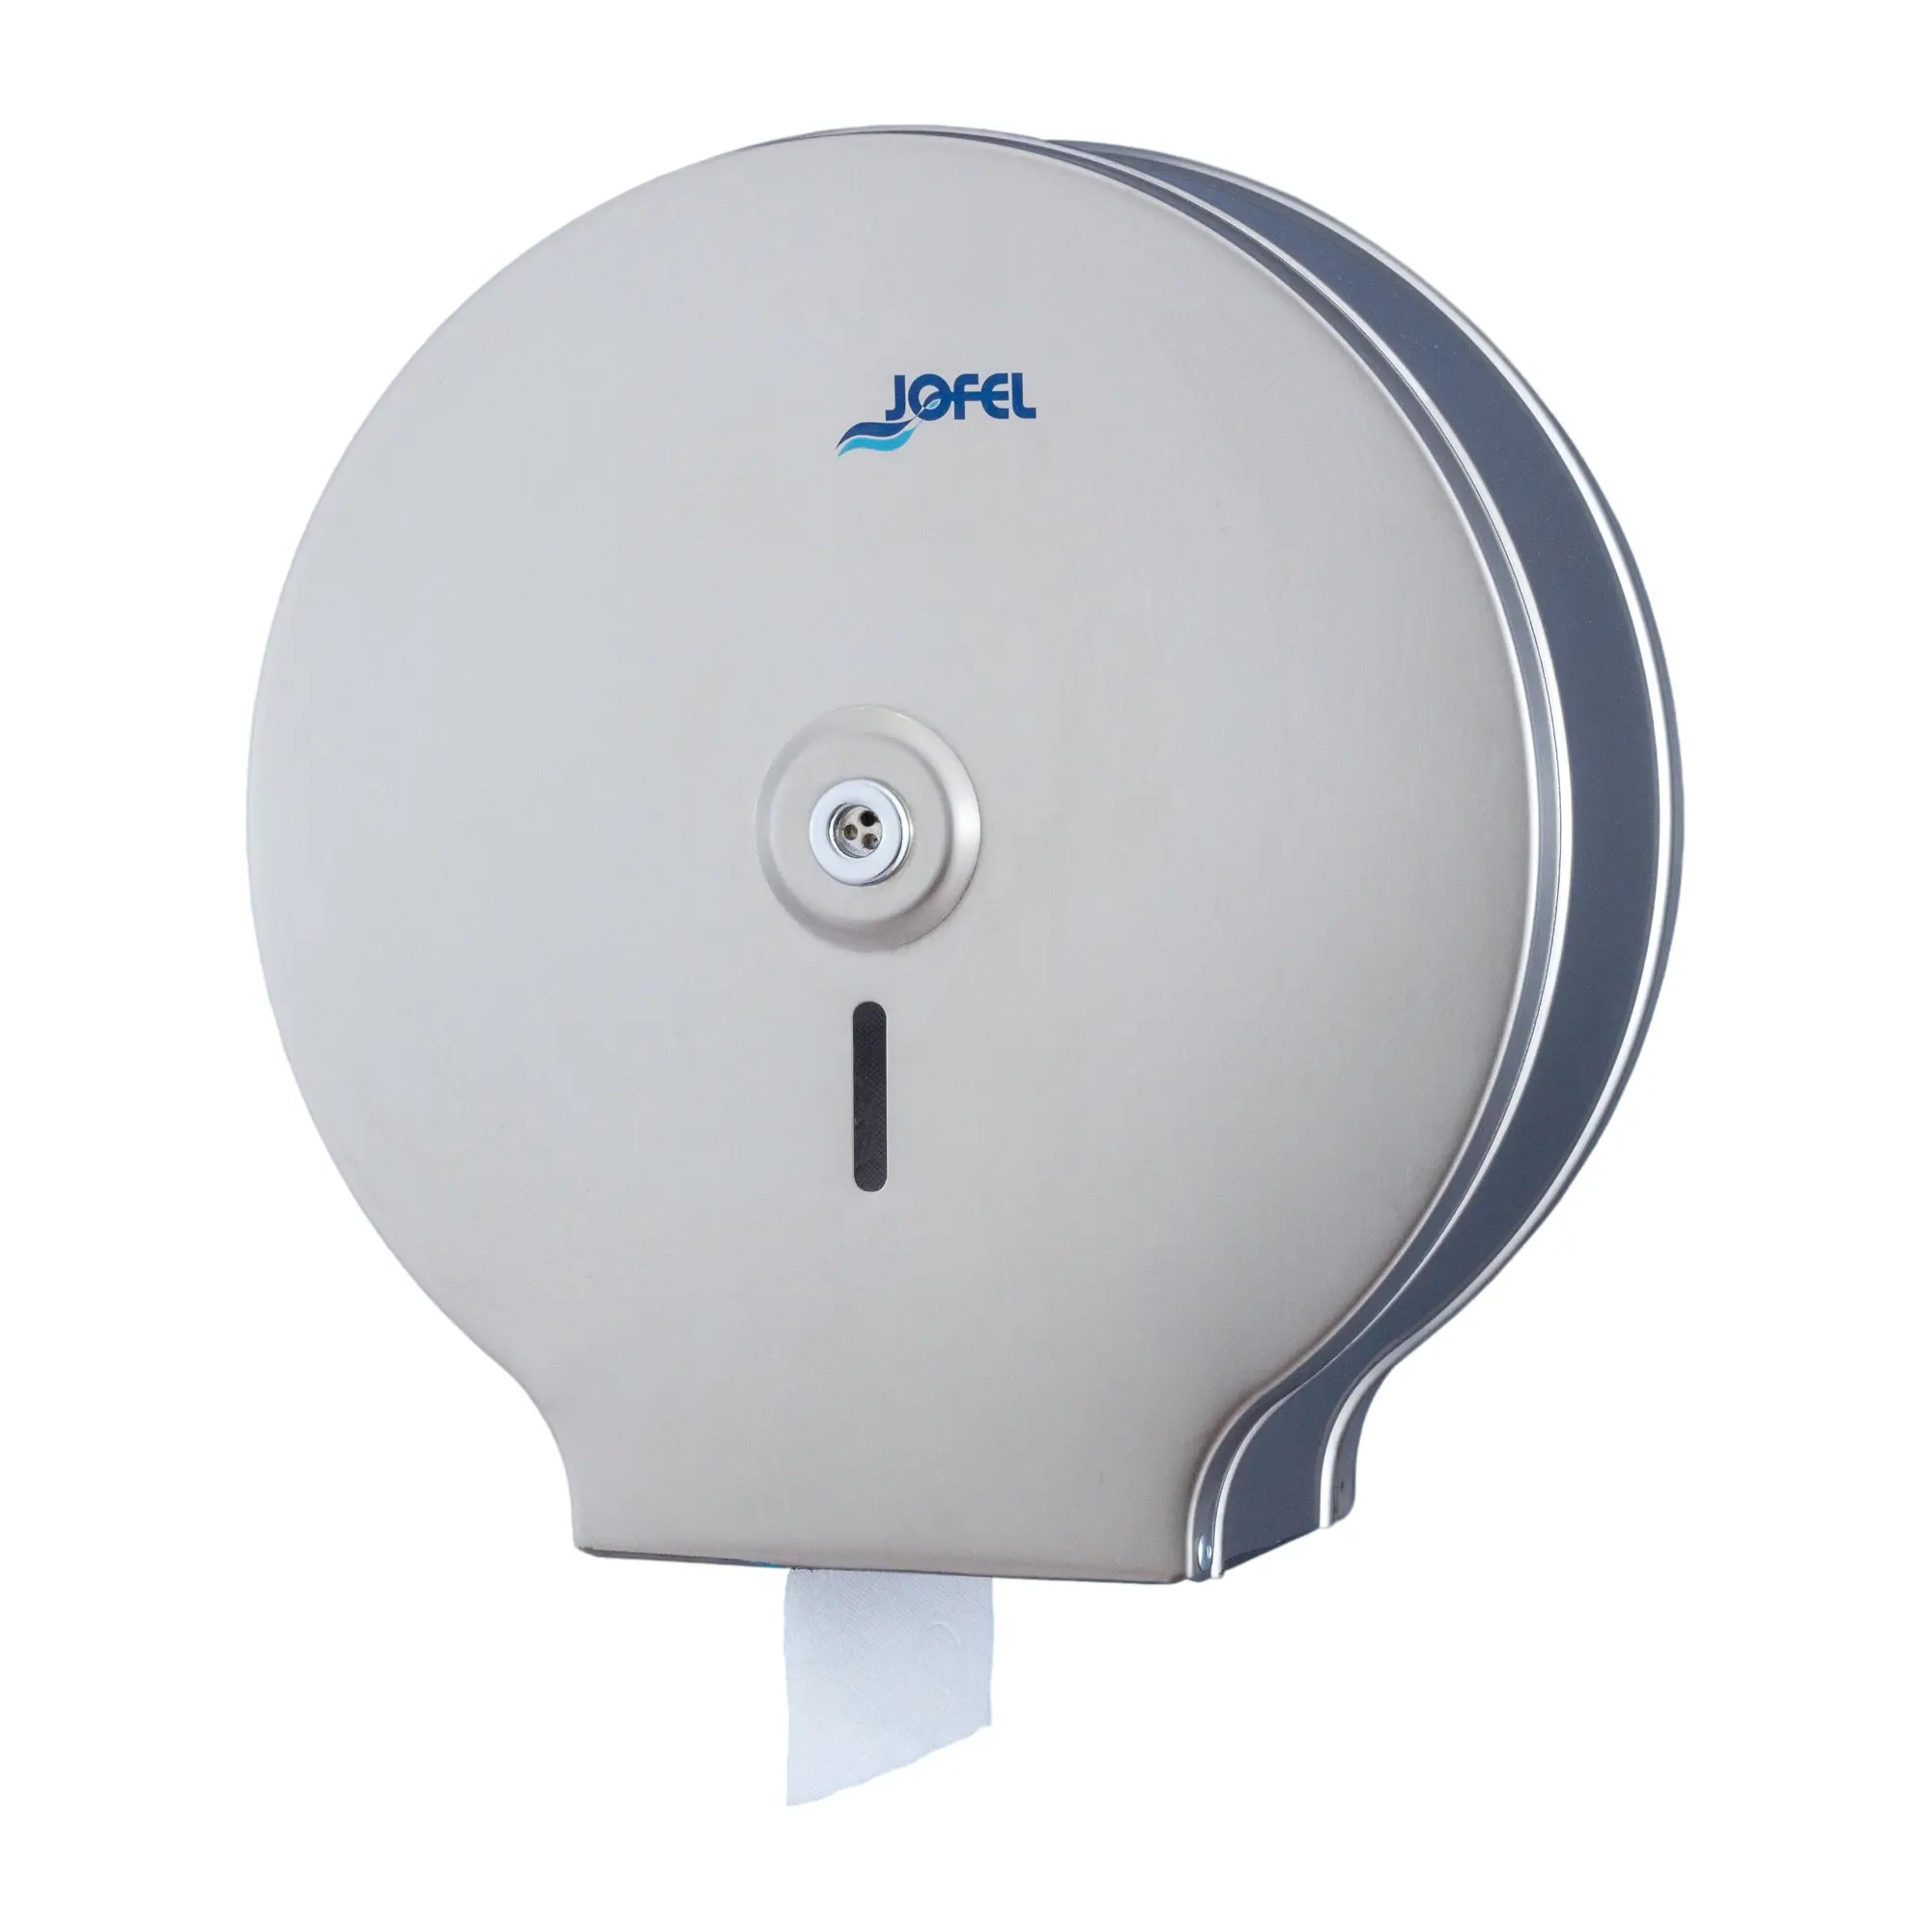 Jofel Inox Toilettenpapierspender Maxi Jumbo Edelstahl gebürstet AE24300_1